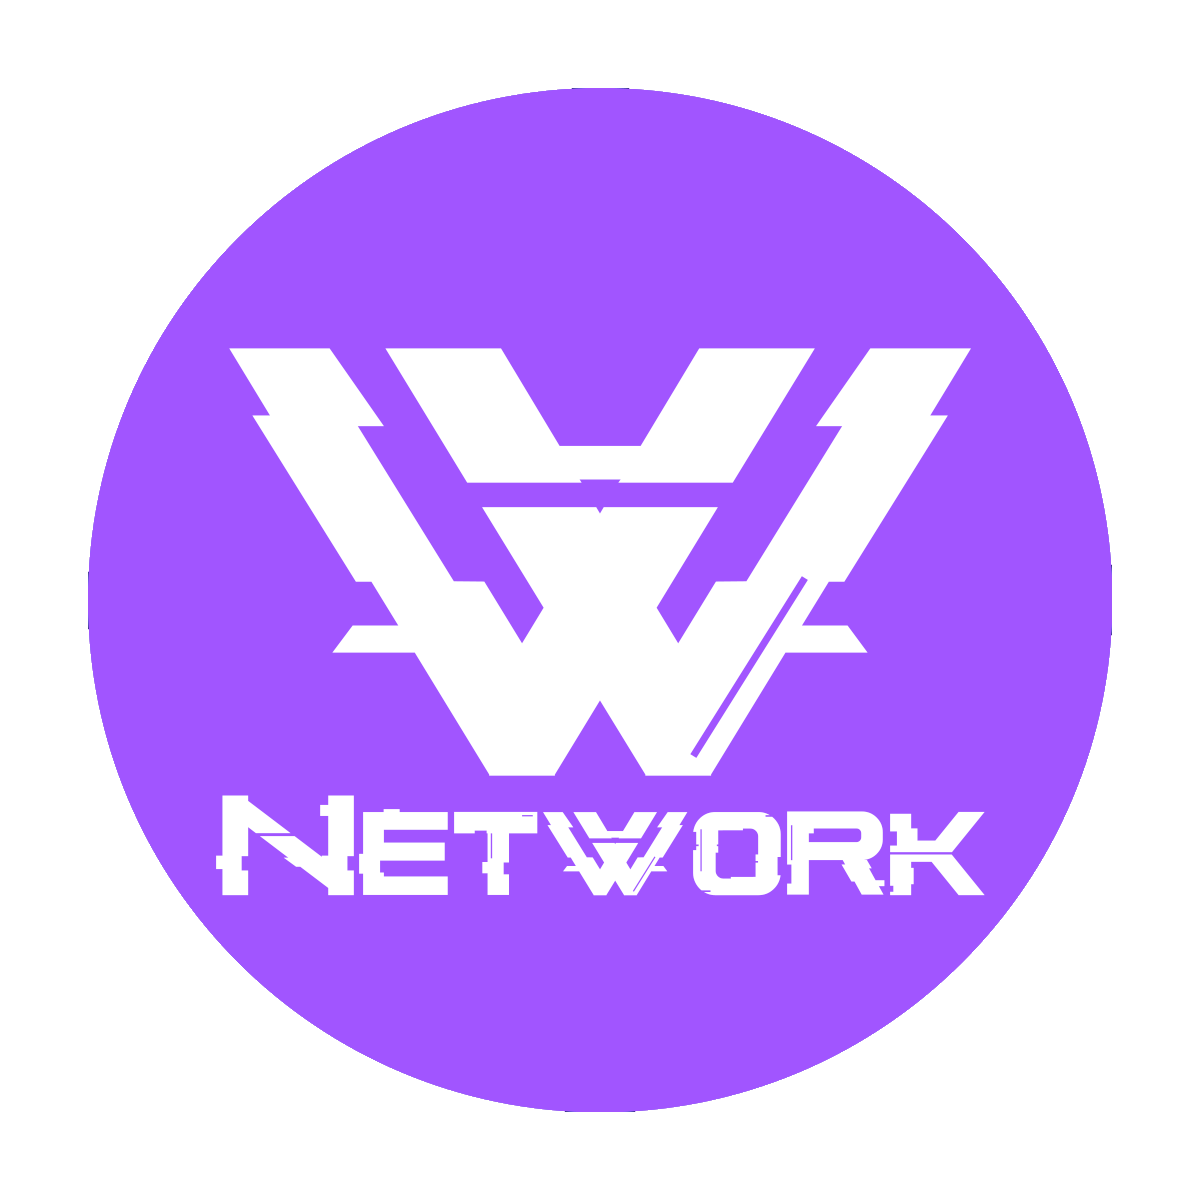 The W Network Logo